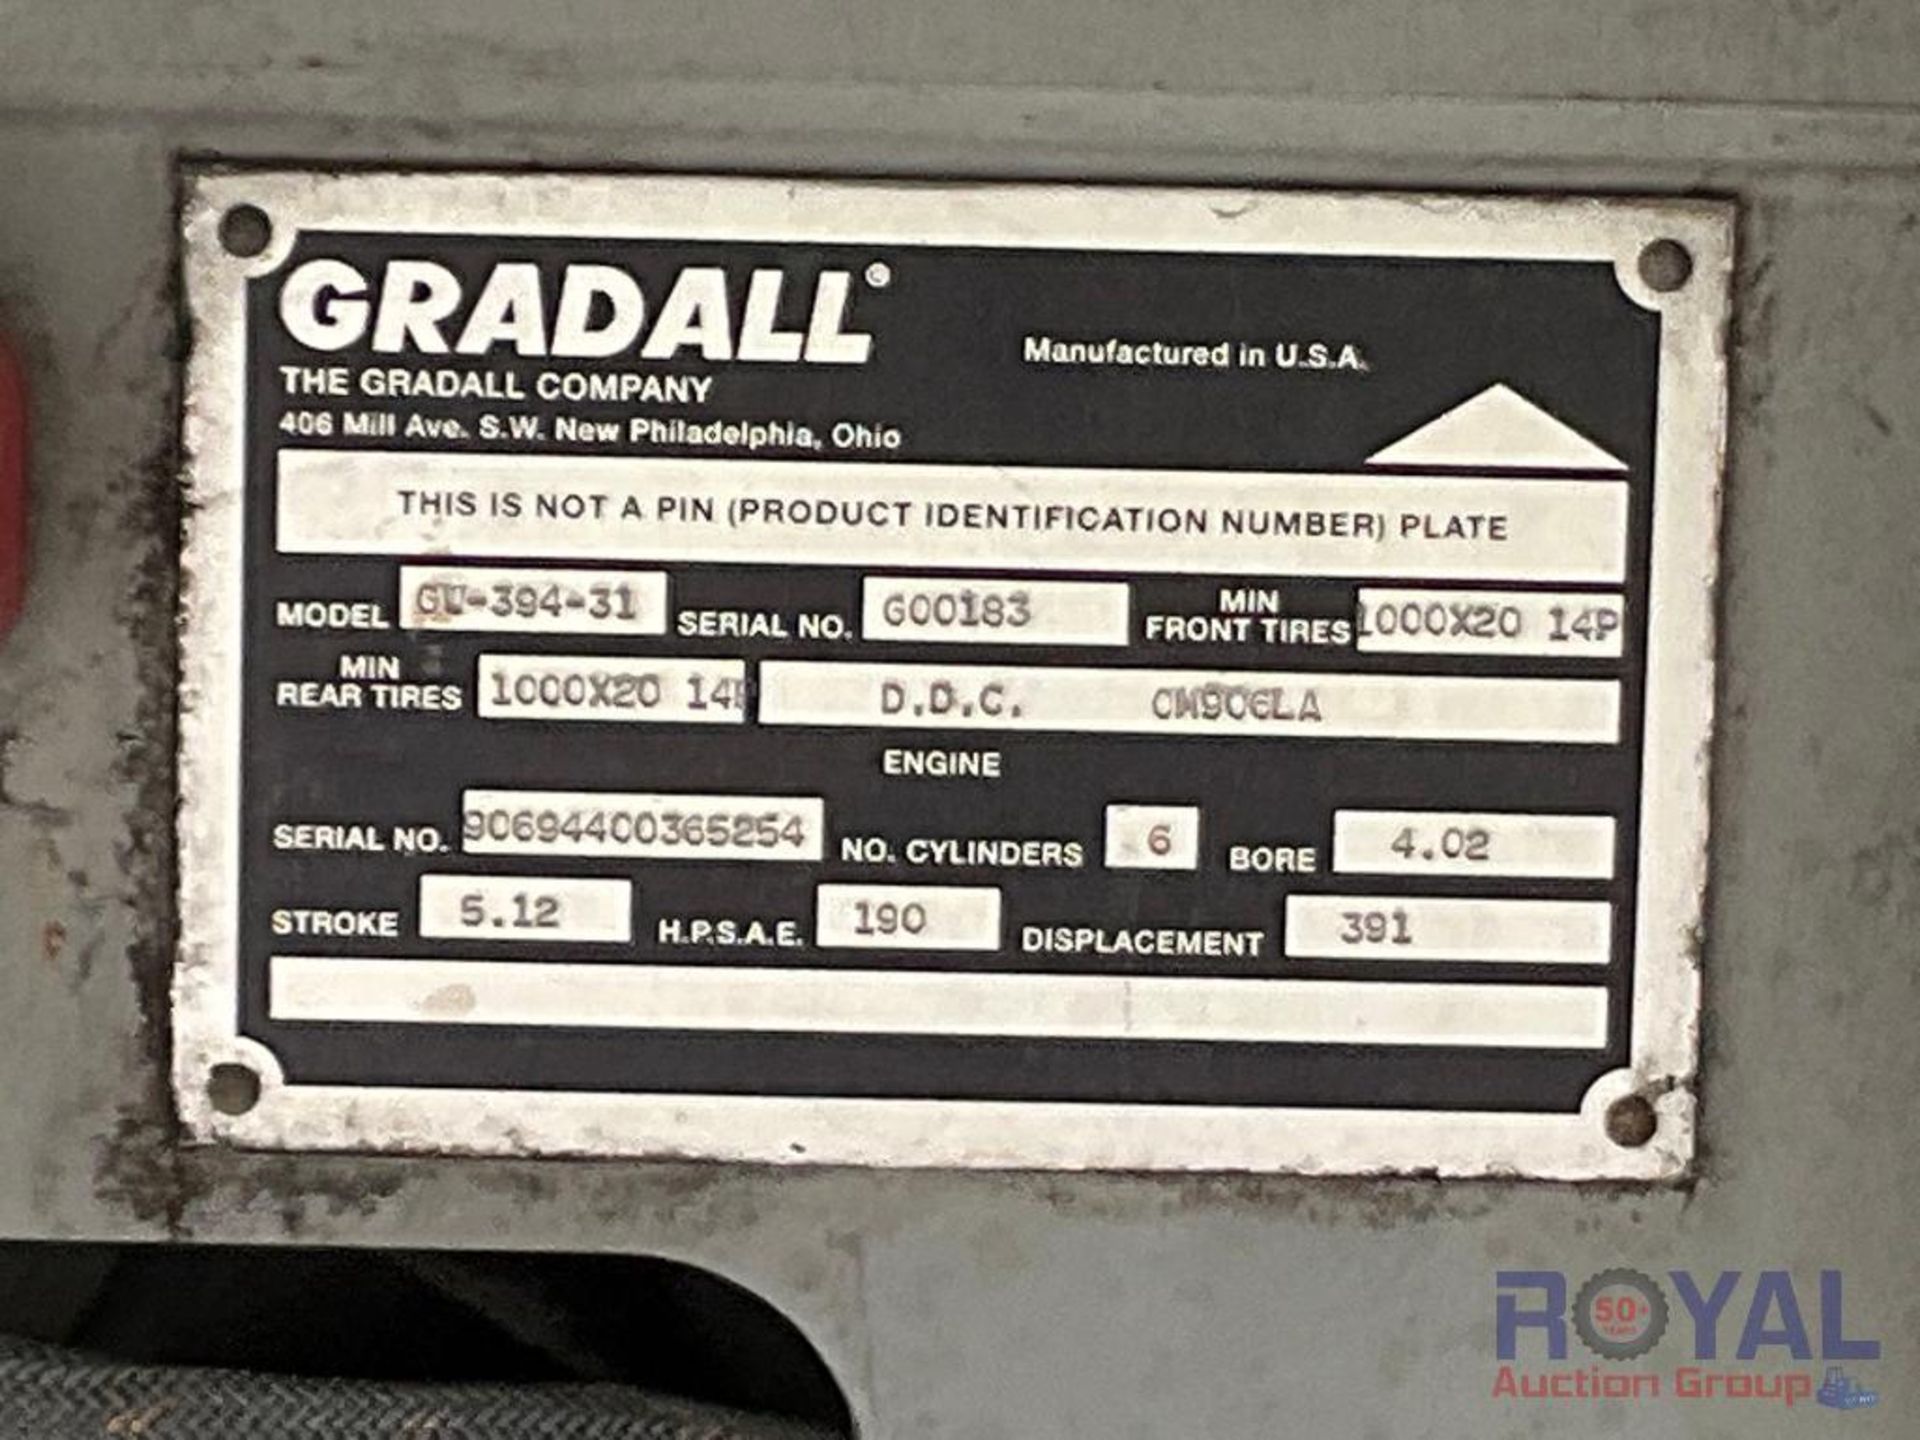 2004 Gradall XL3100 Highway Grading Wheeled Excavator - Image 5 of 42